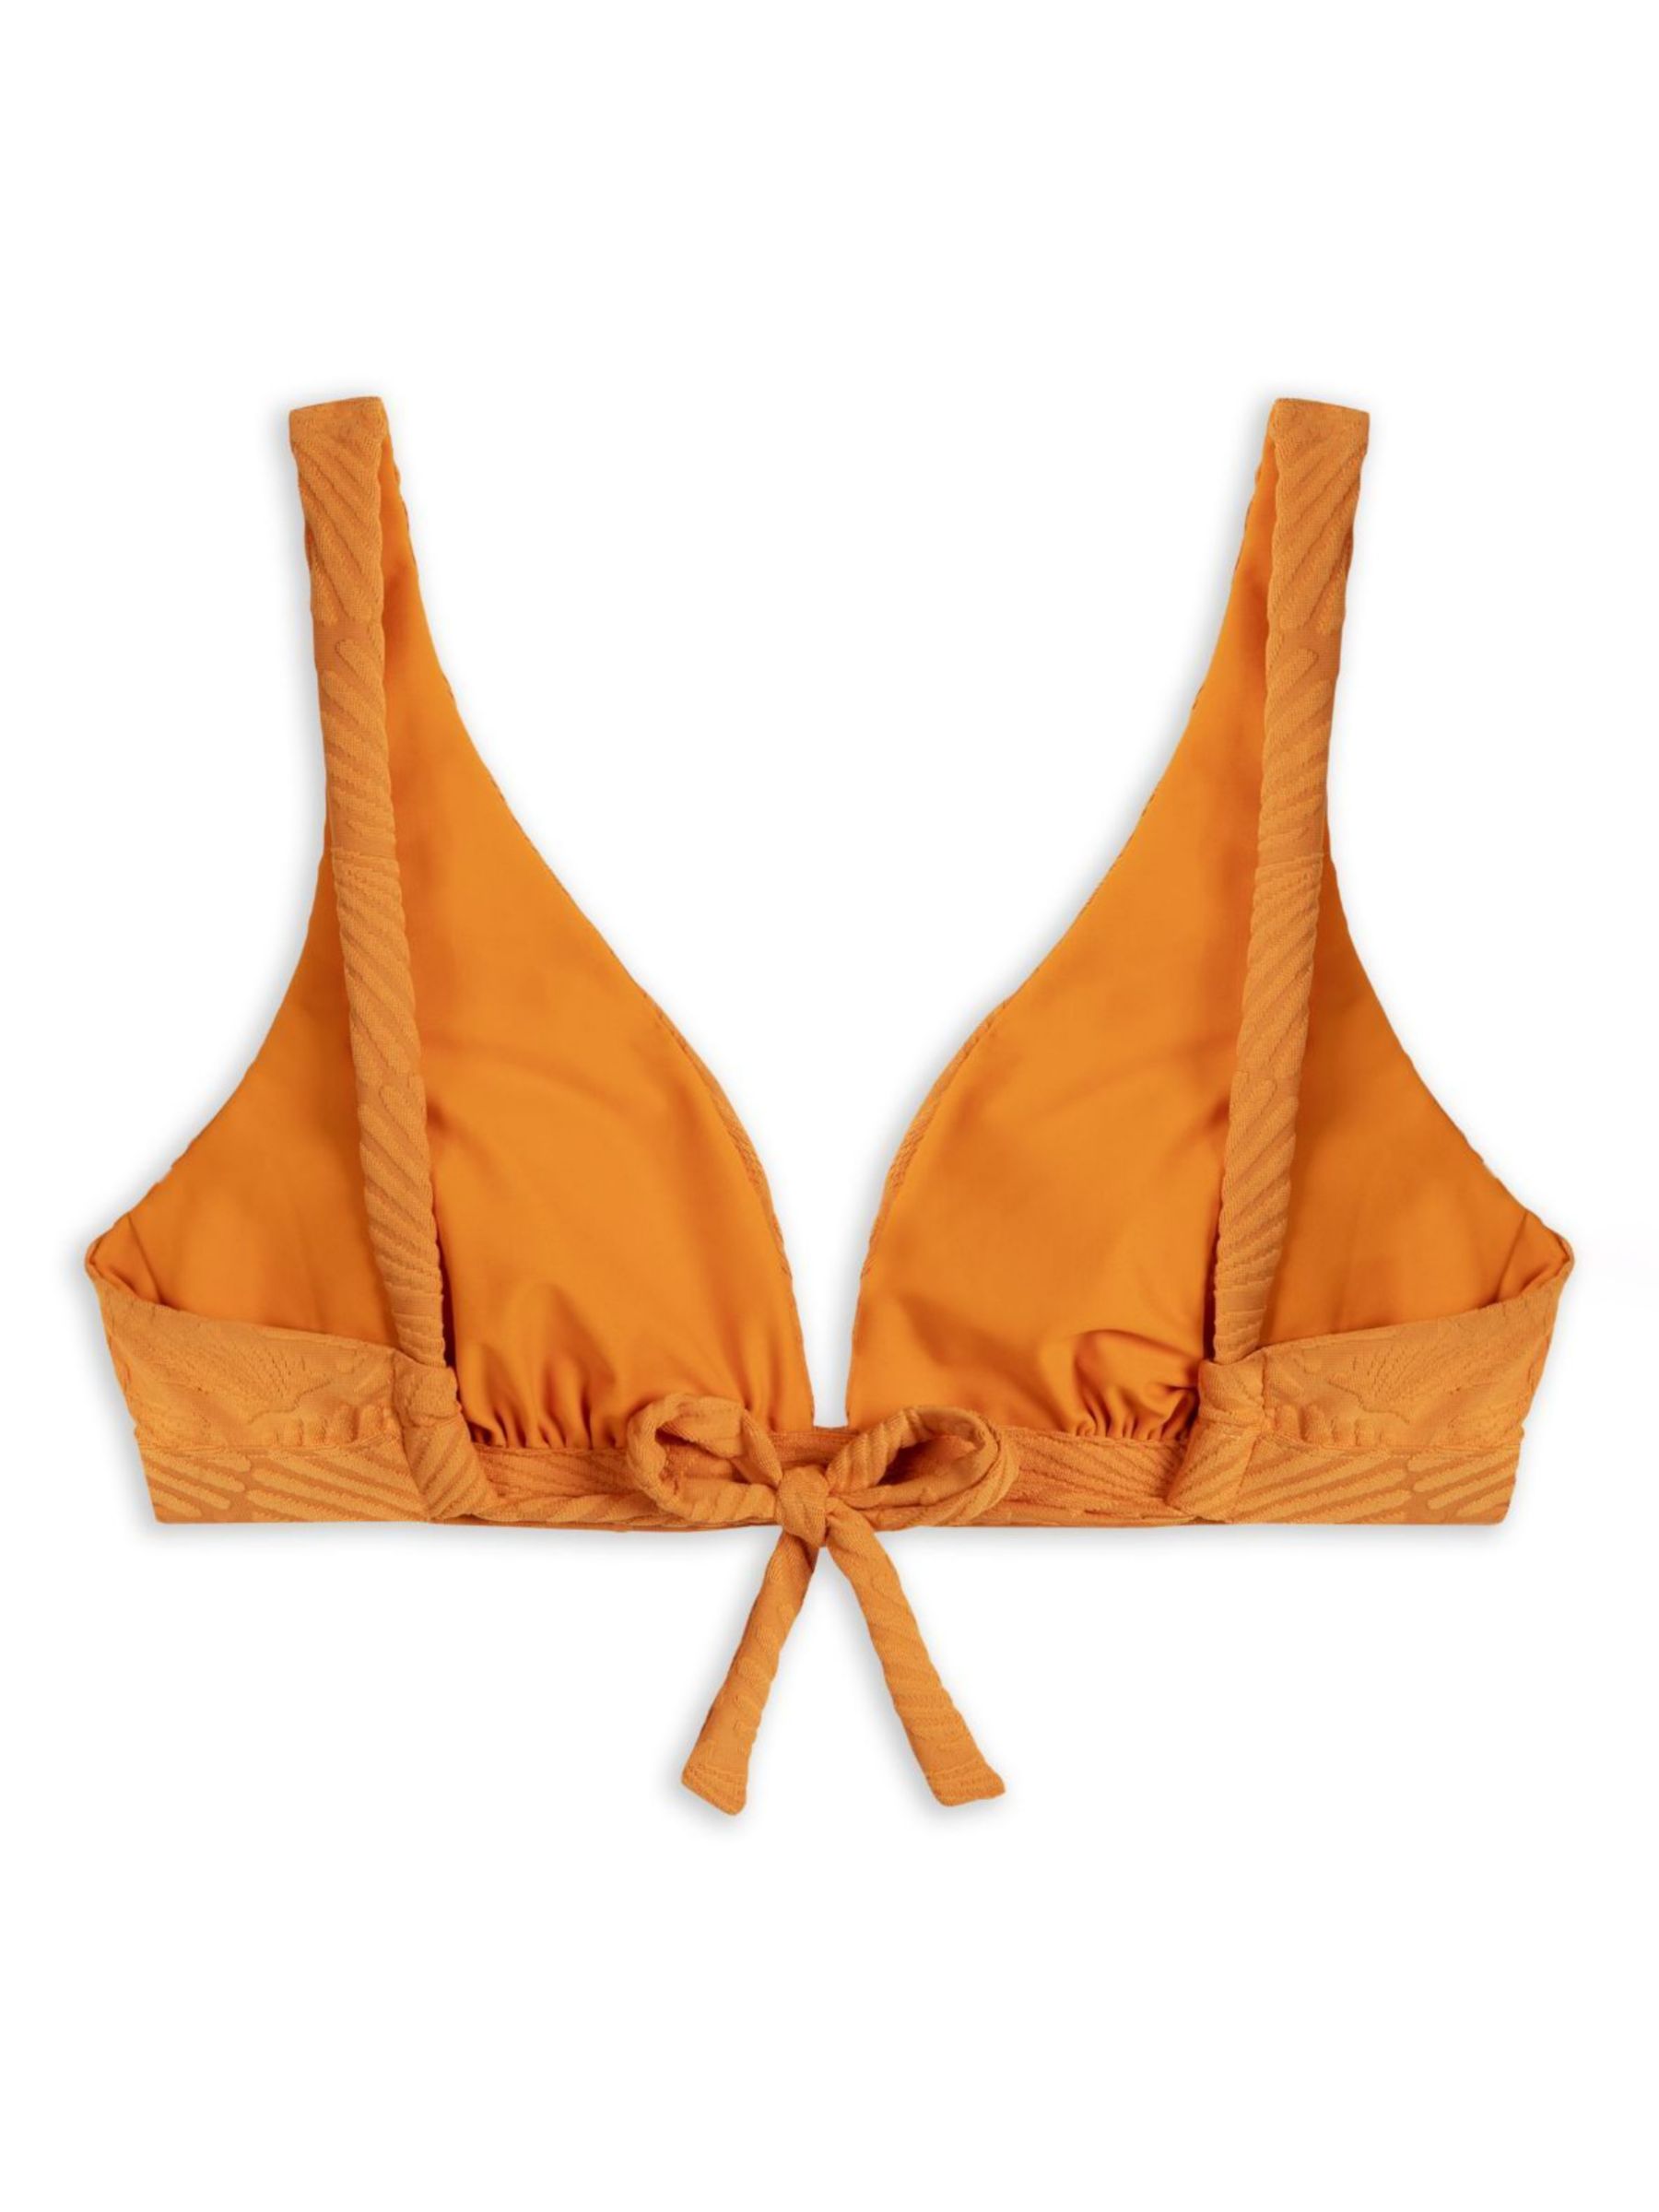 Chelsea Peers Jacquard Shell Reversible Triangle Bikini Top, Orange, 6